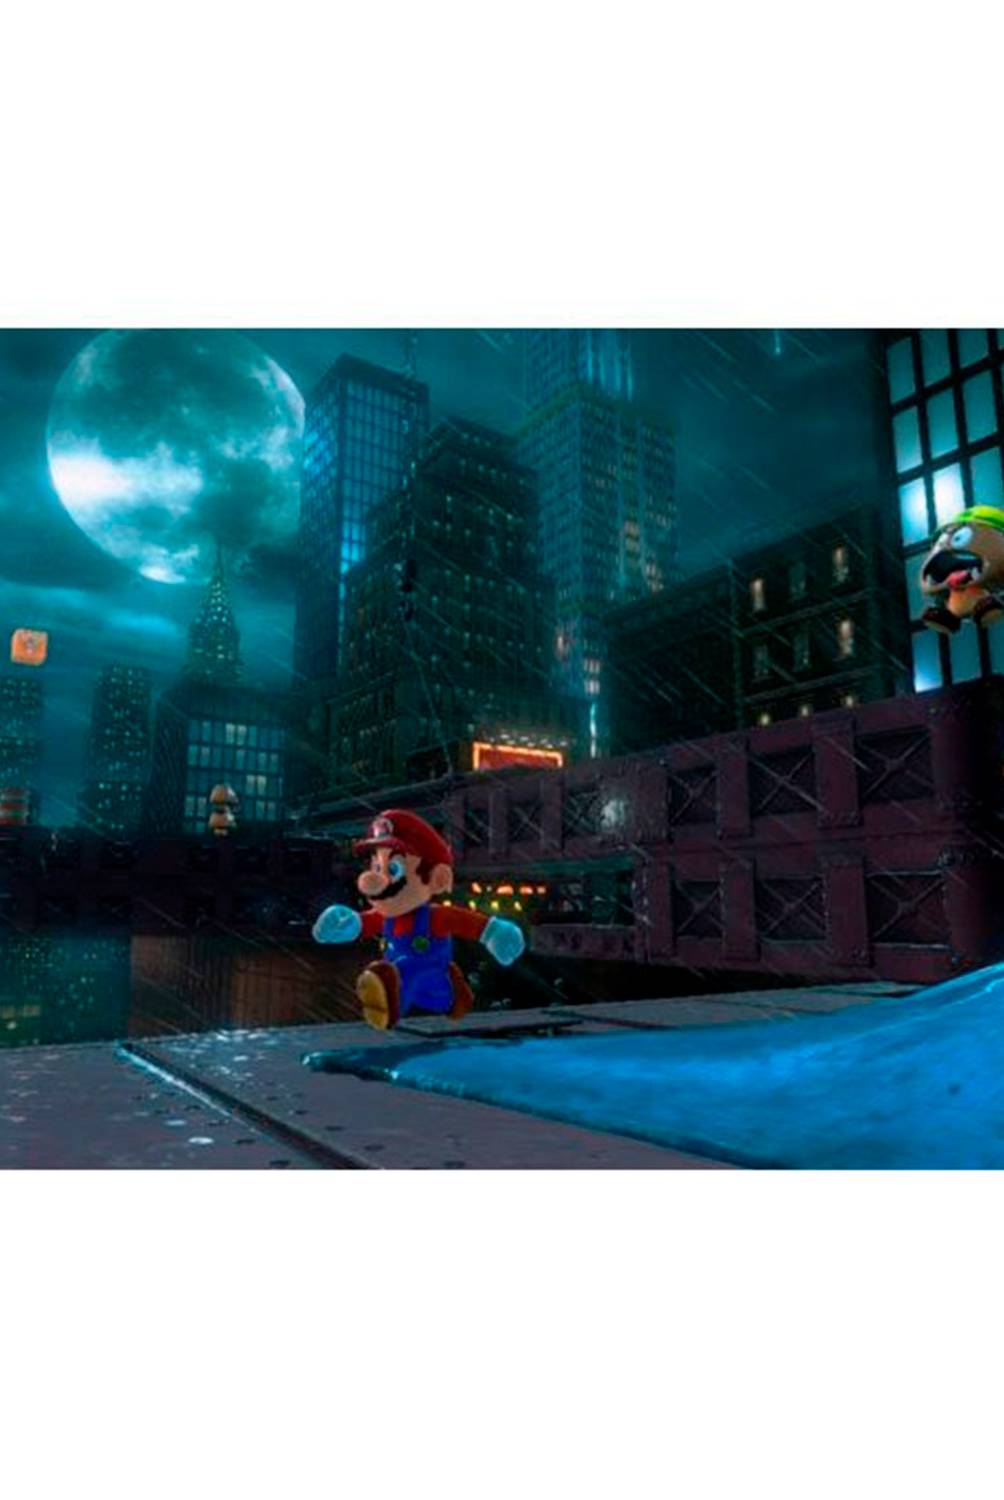 NINTENDO - Super Mario Odyssey Nintendo Switch